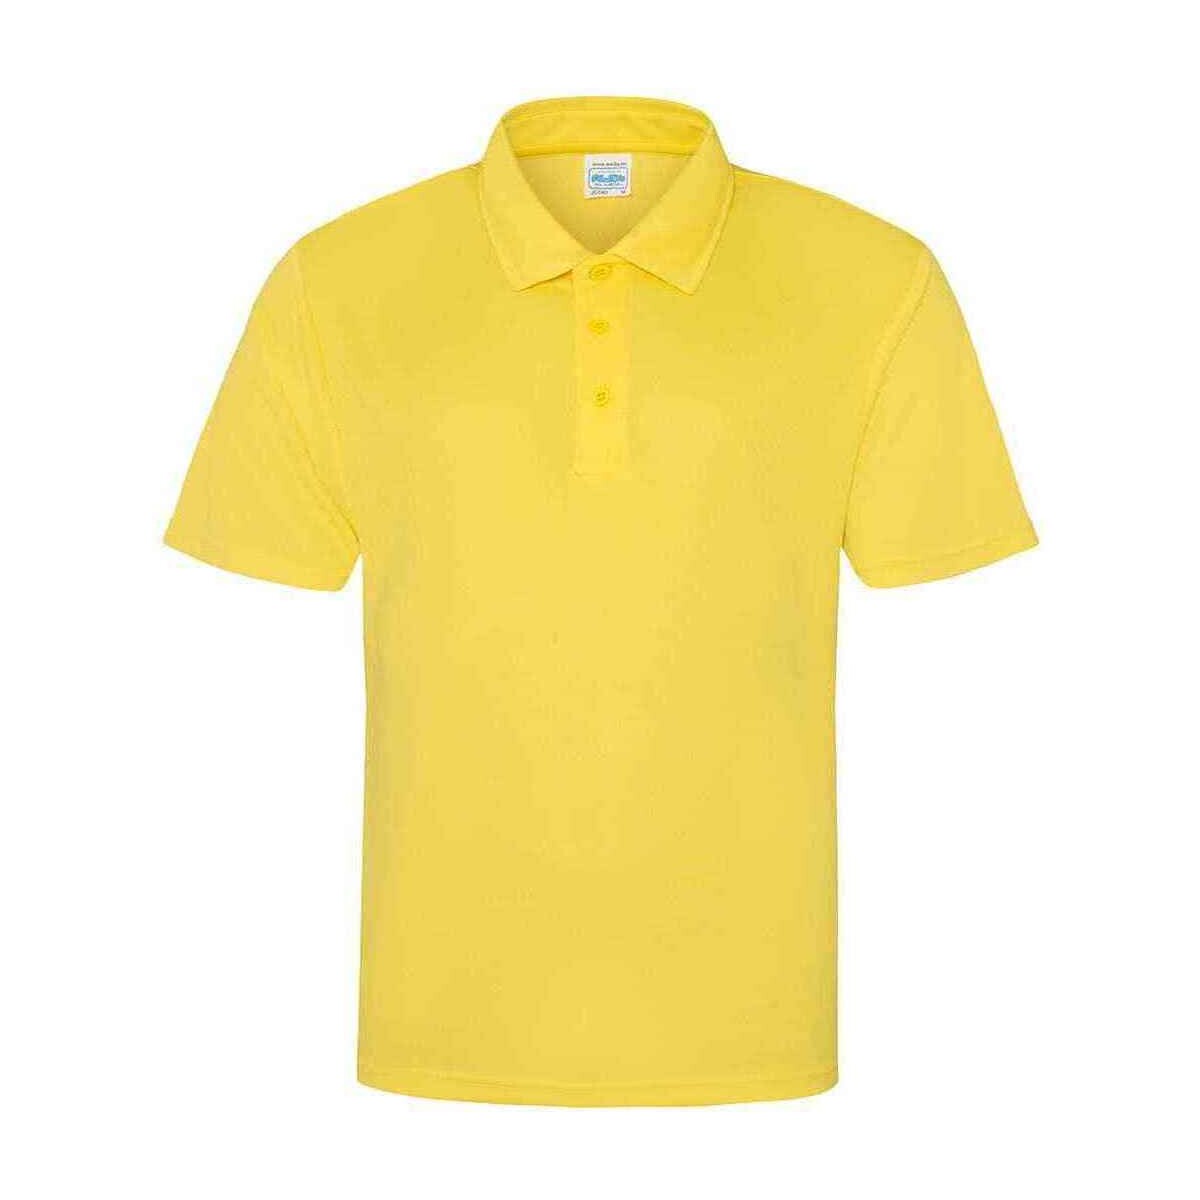 textil Hombre Tops y Camisetas Awdis Cool JC040 Multicolor